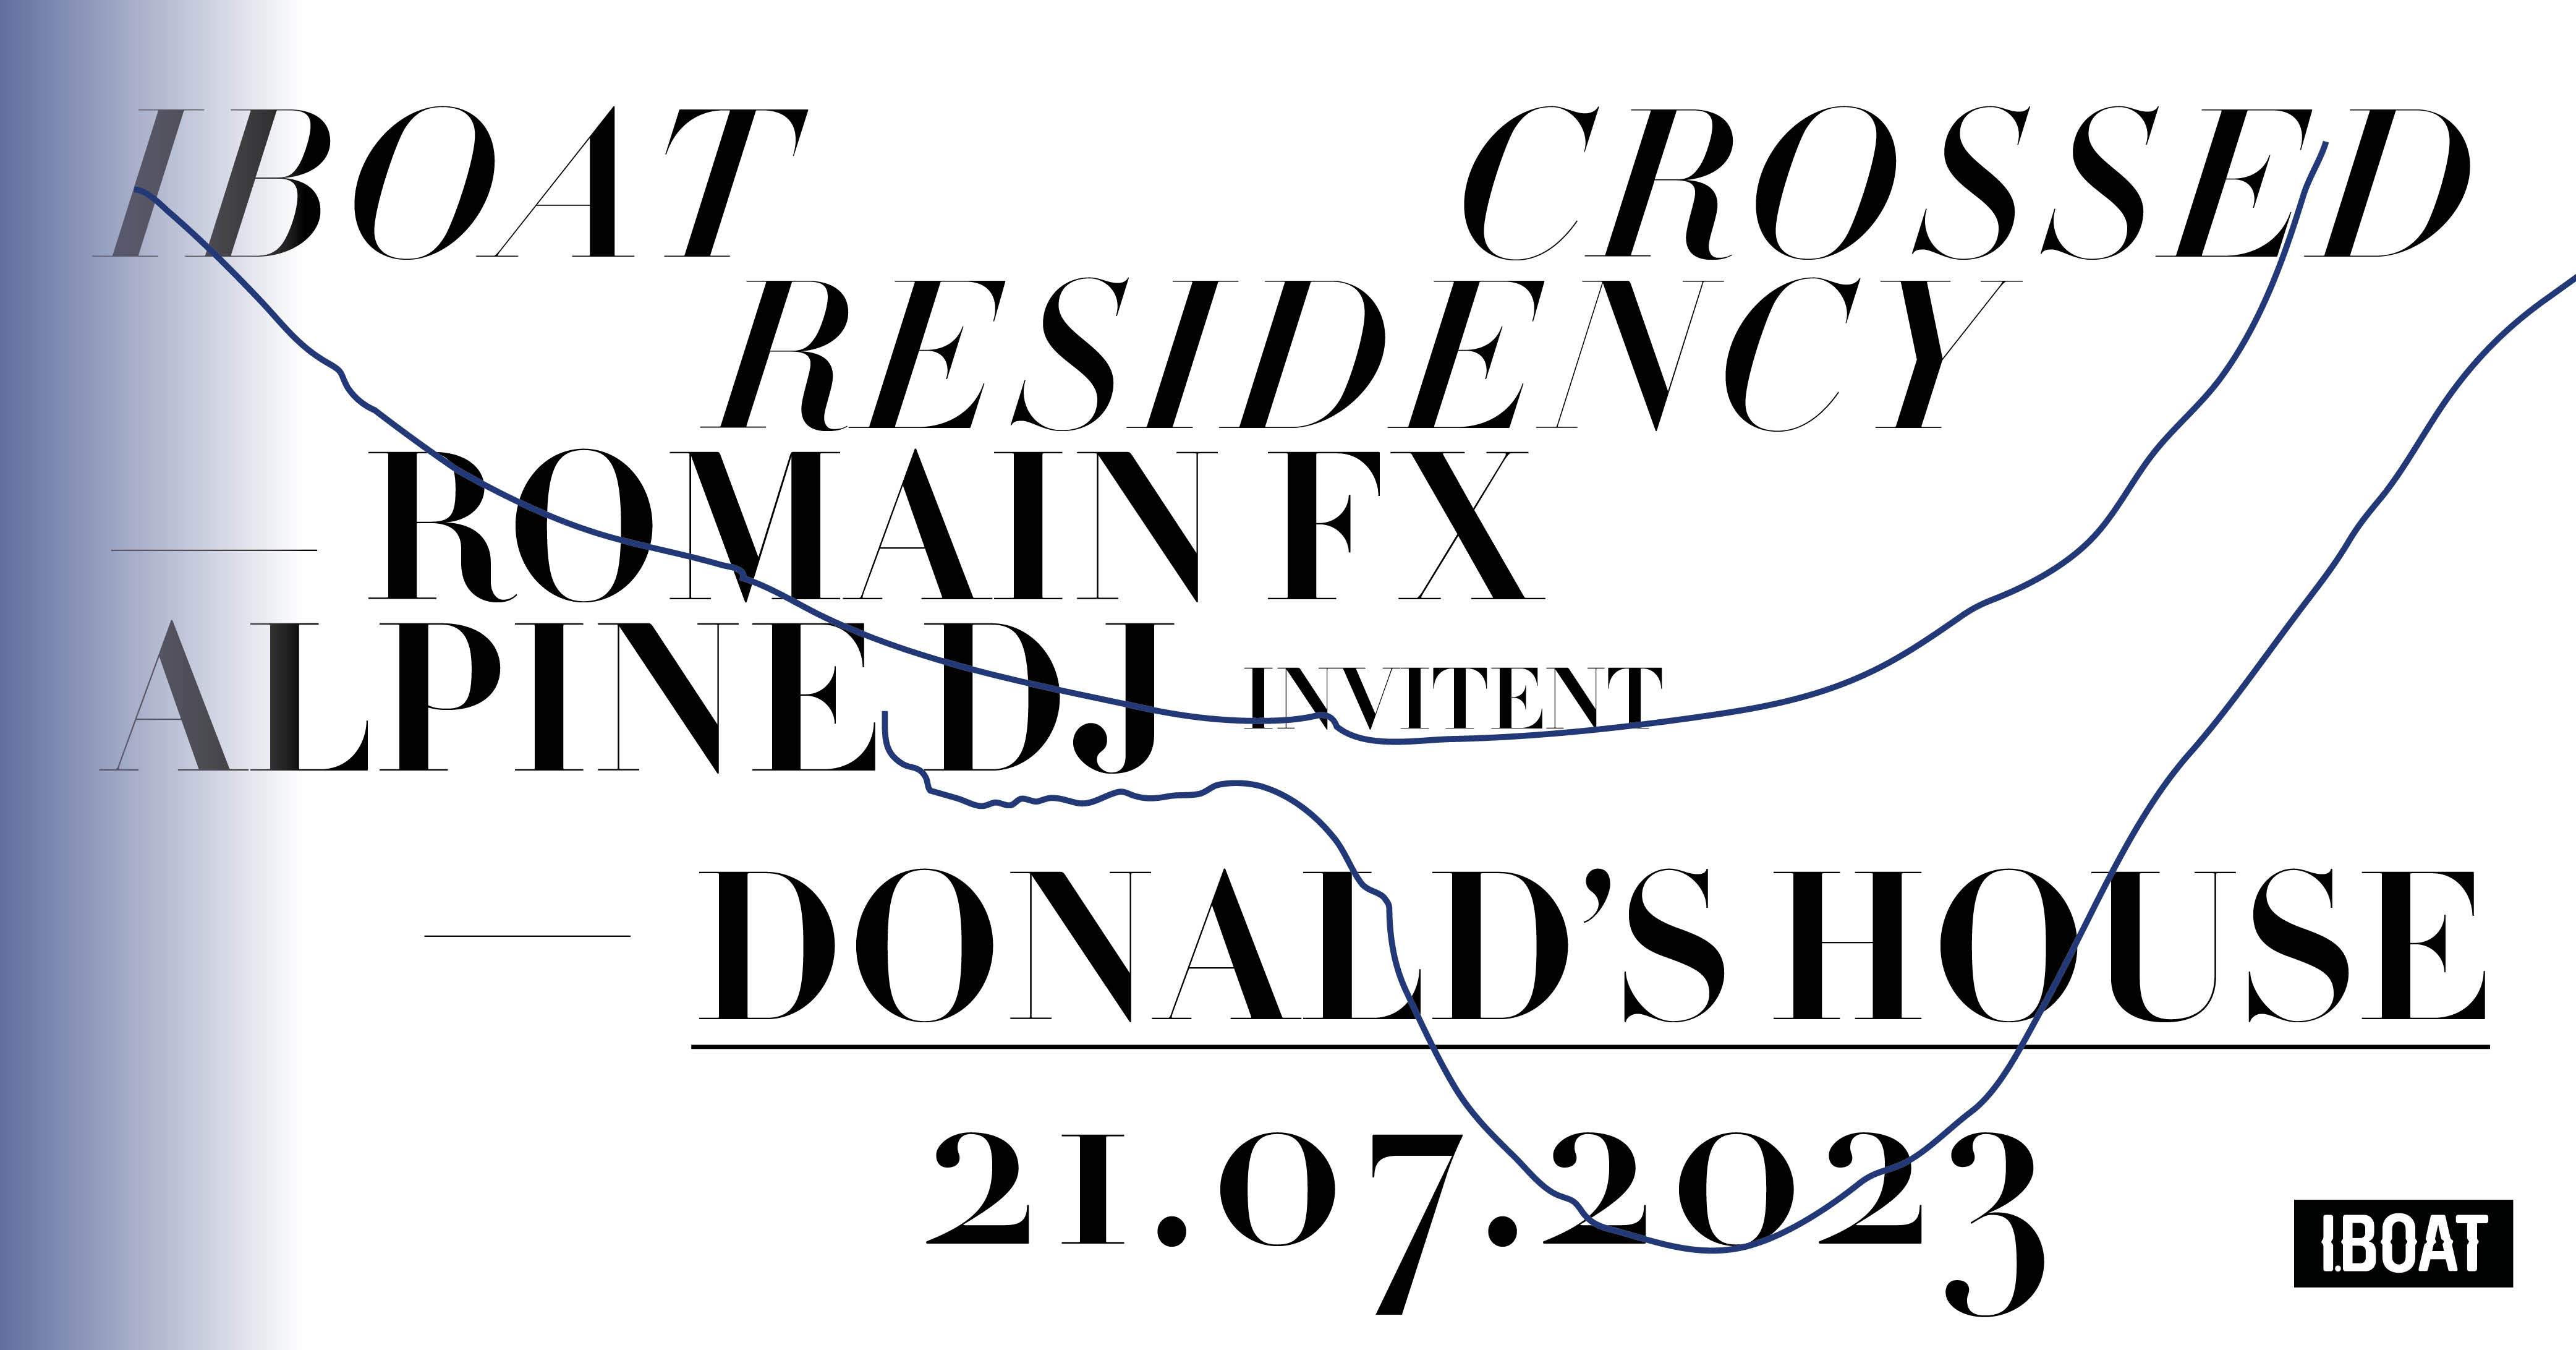 Romain Fx, Alpine DJ, Donald's House - フライヤー表